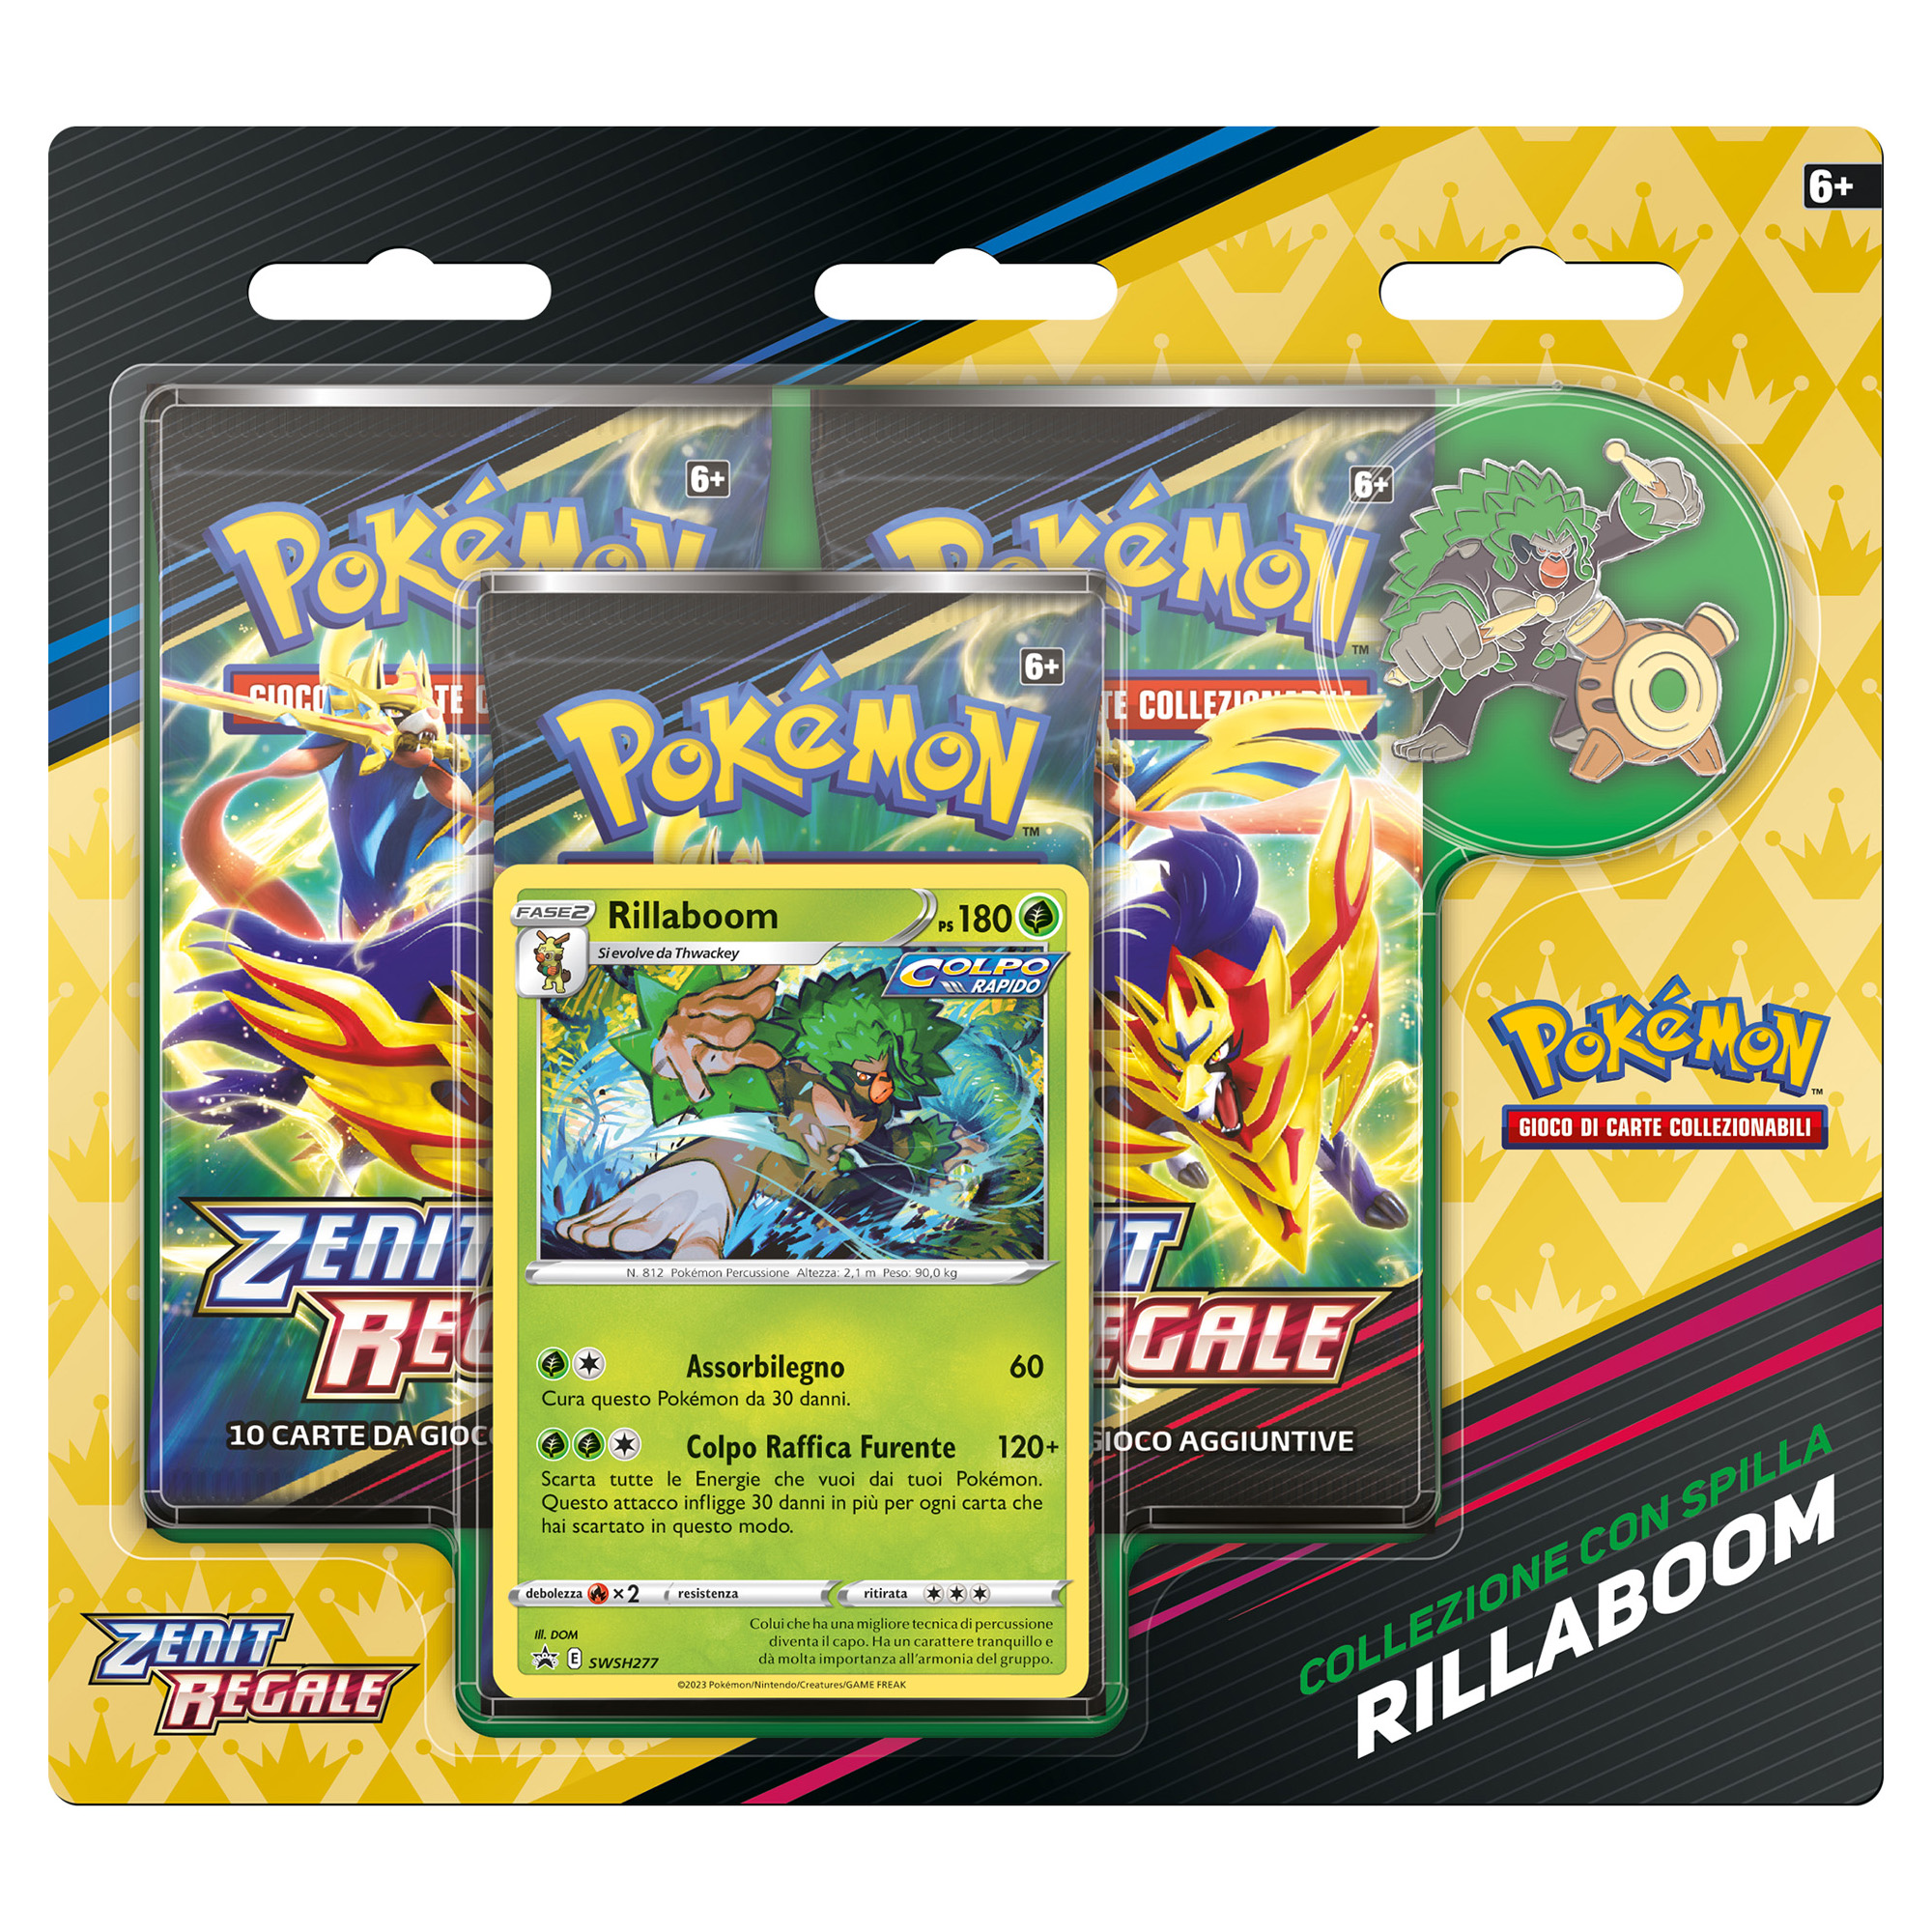 Pokémon Collezione spilla Rillaboom, Cinderace o Inteleon Zenit Regale - Pokémon